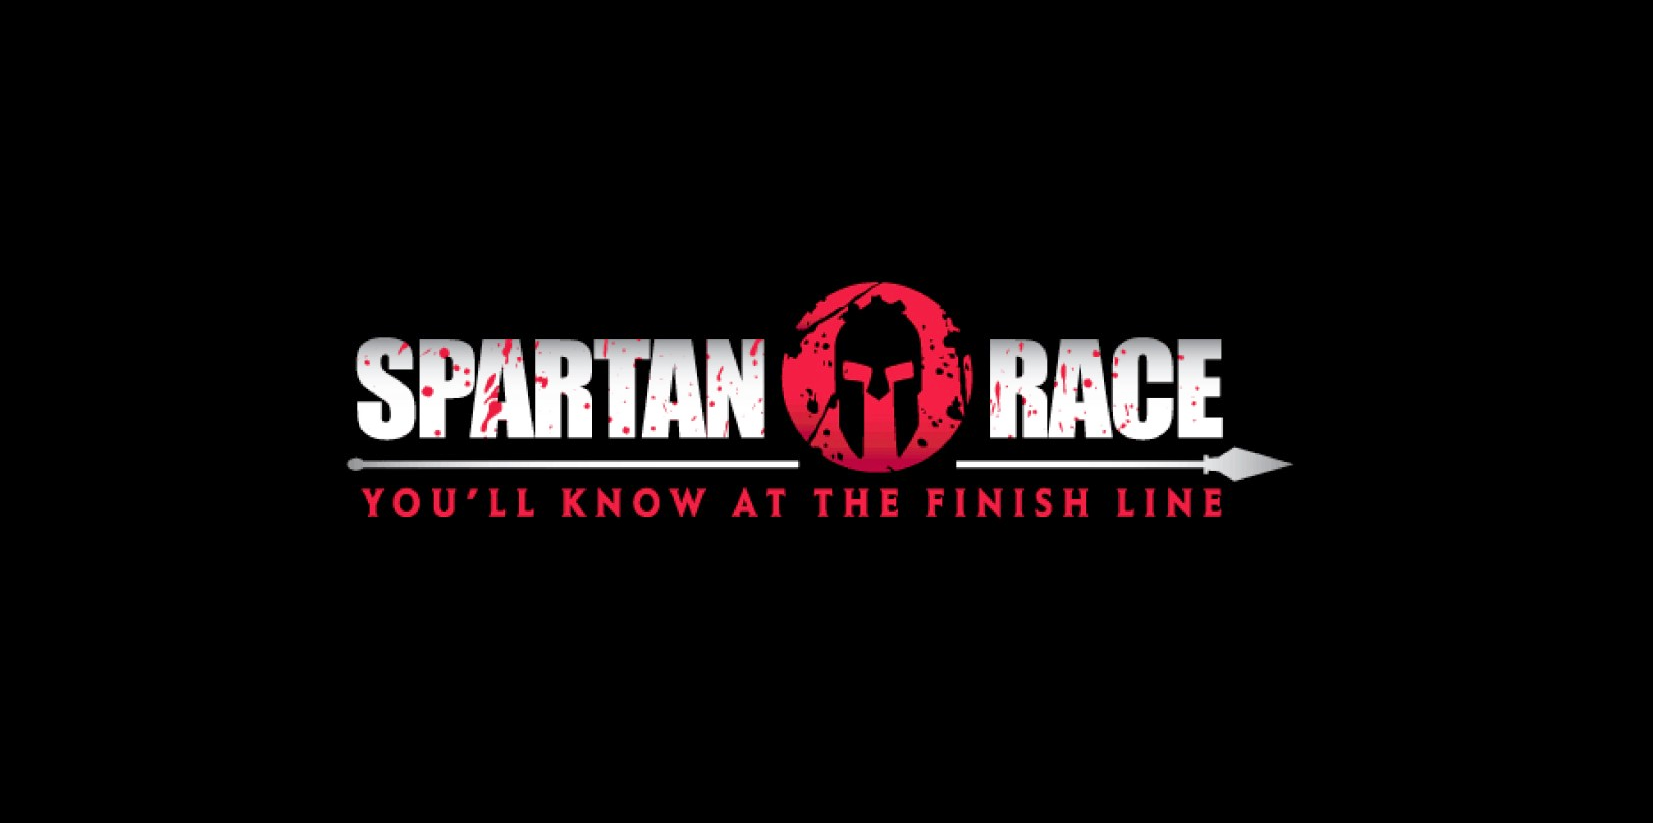 Spartan Race Logo Vector Blake Graham For